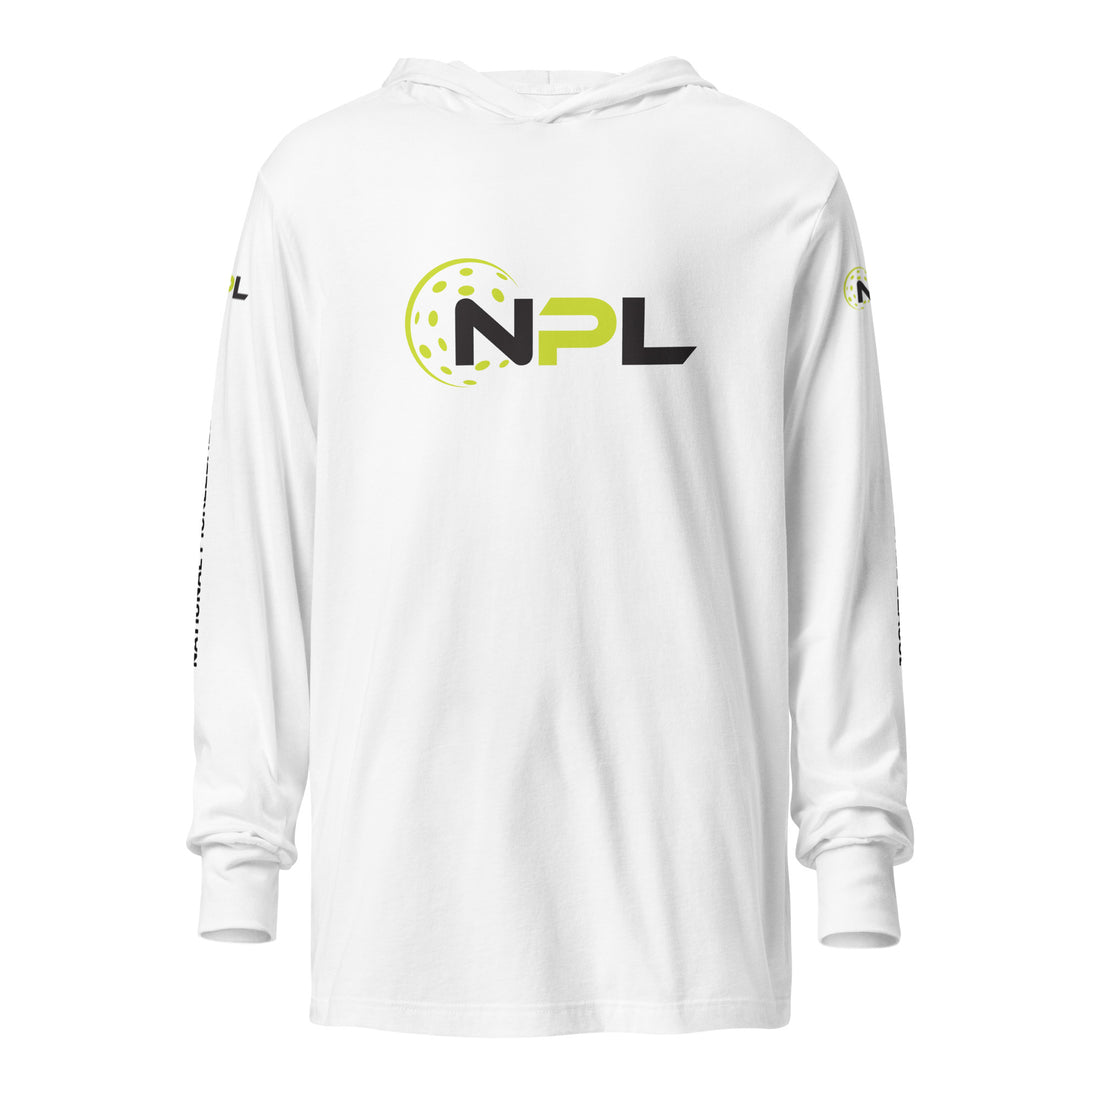 NPL™ Hooded Long Sleeve Unisex T-Shirt!